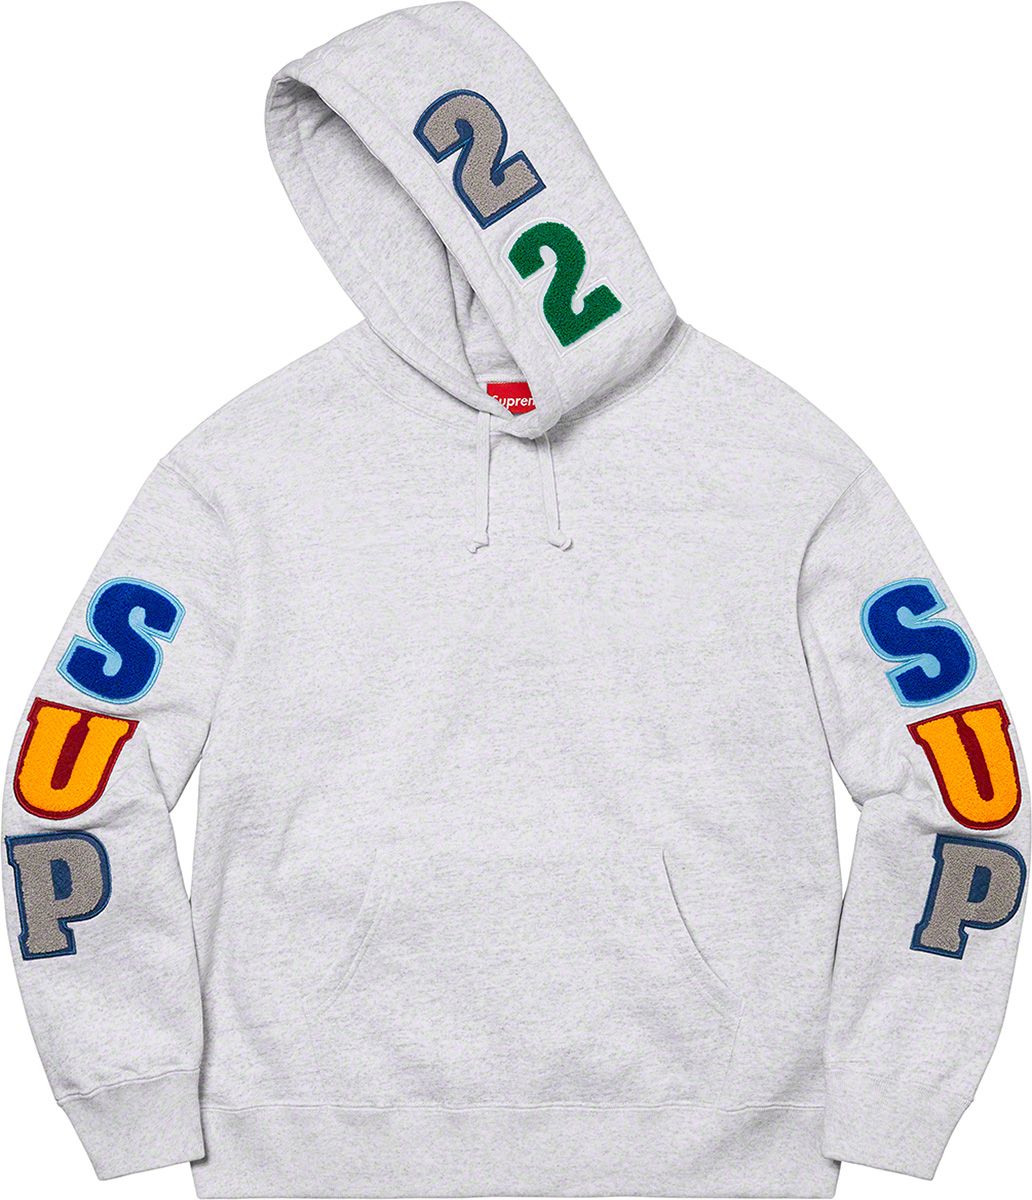 Supreme Team Chenille Hooded Sweatshirt - Spring/Summer 2022